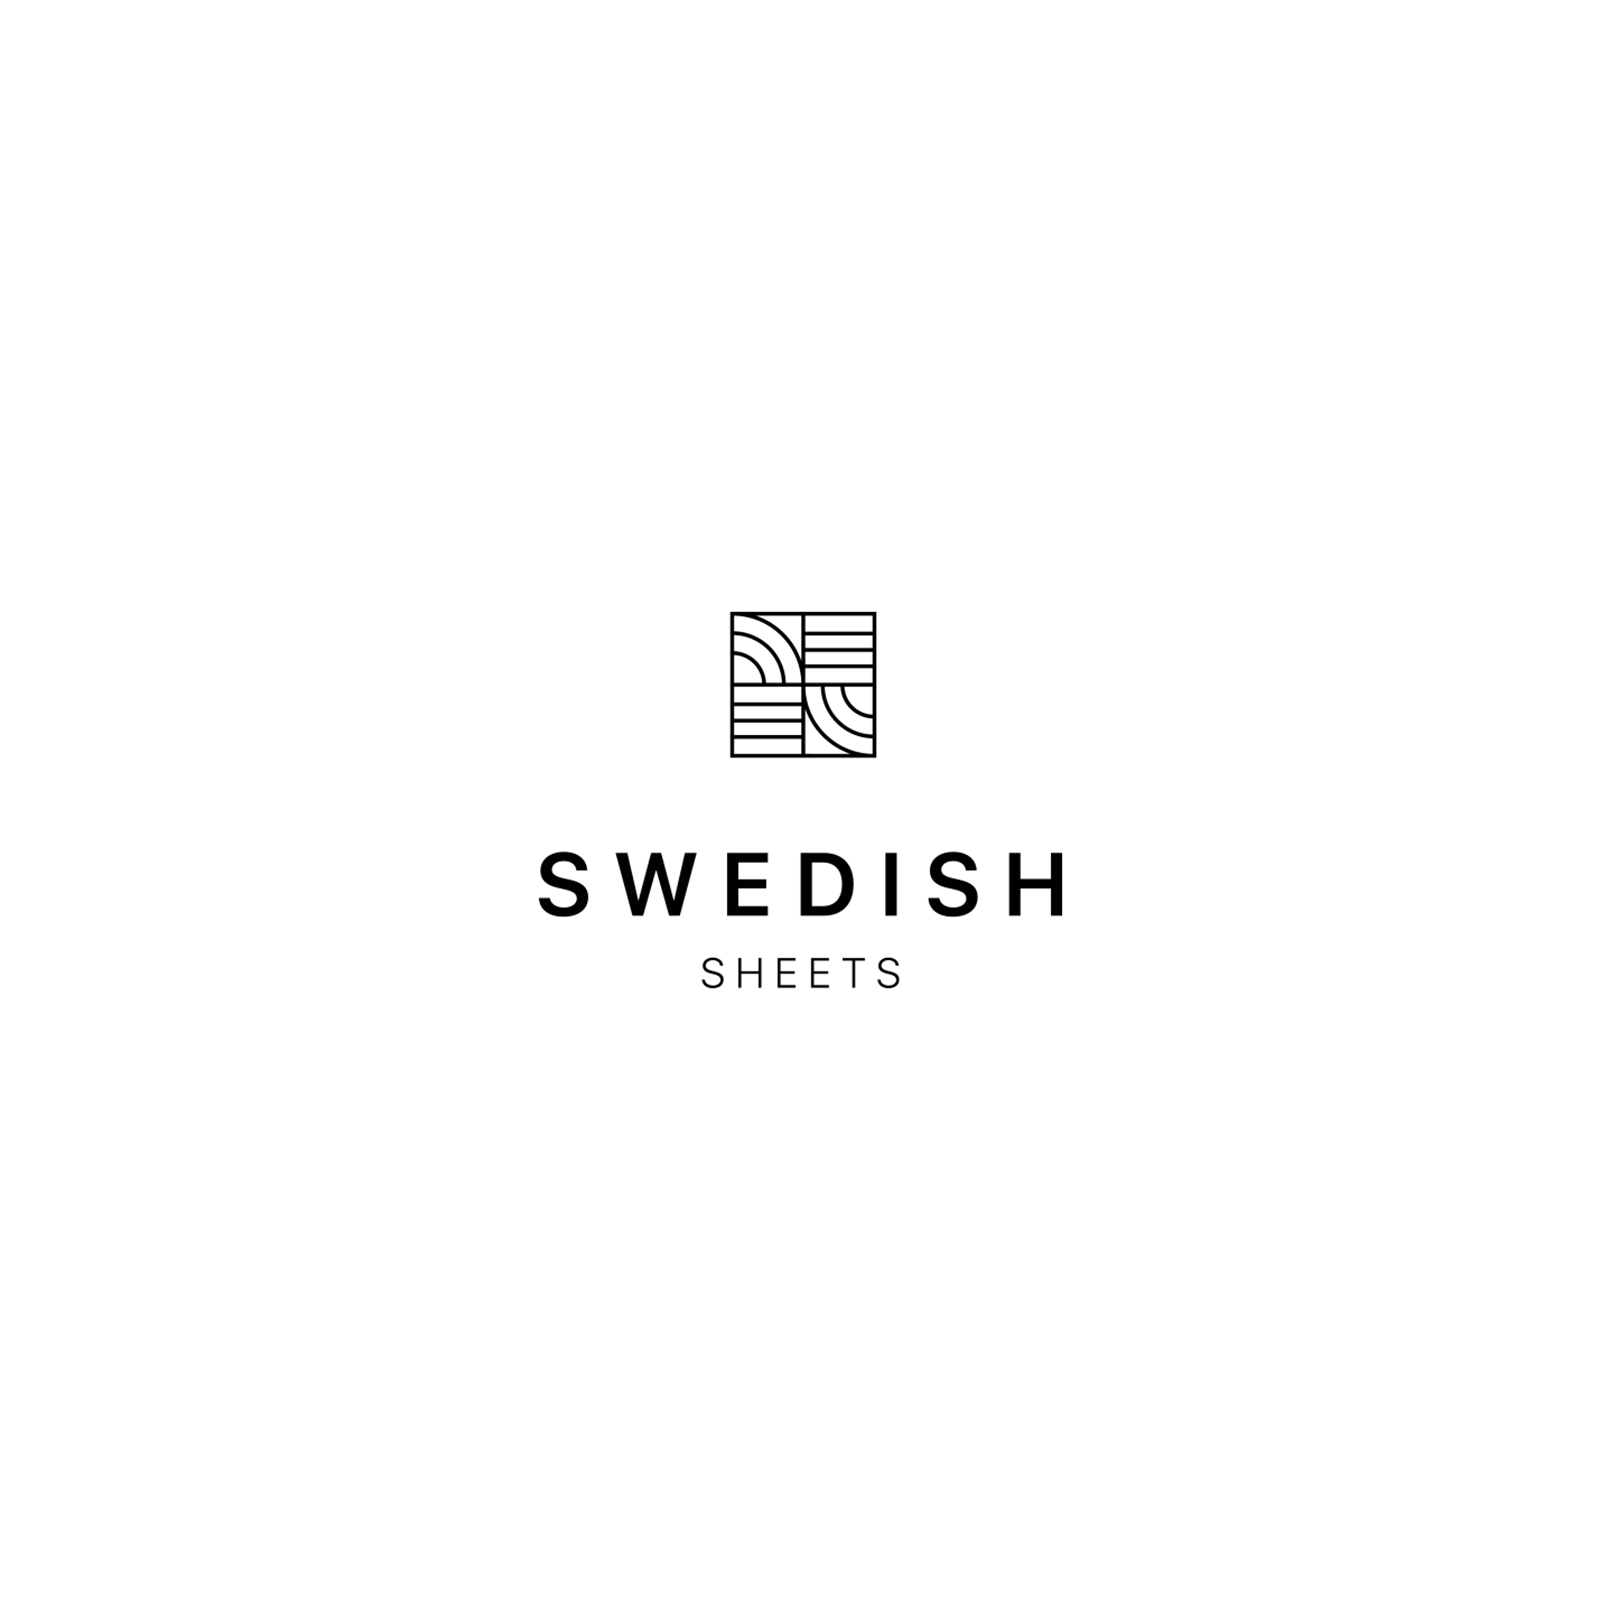 Sweedish Logo - Image result for swedish logo design | Branding, Logos, and Signs